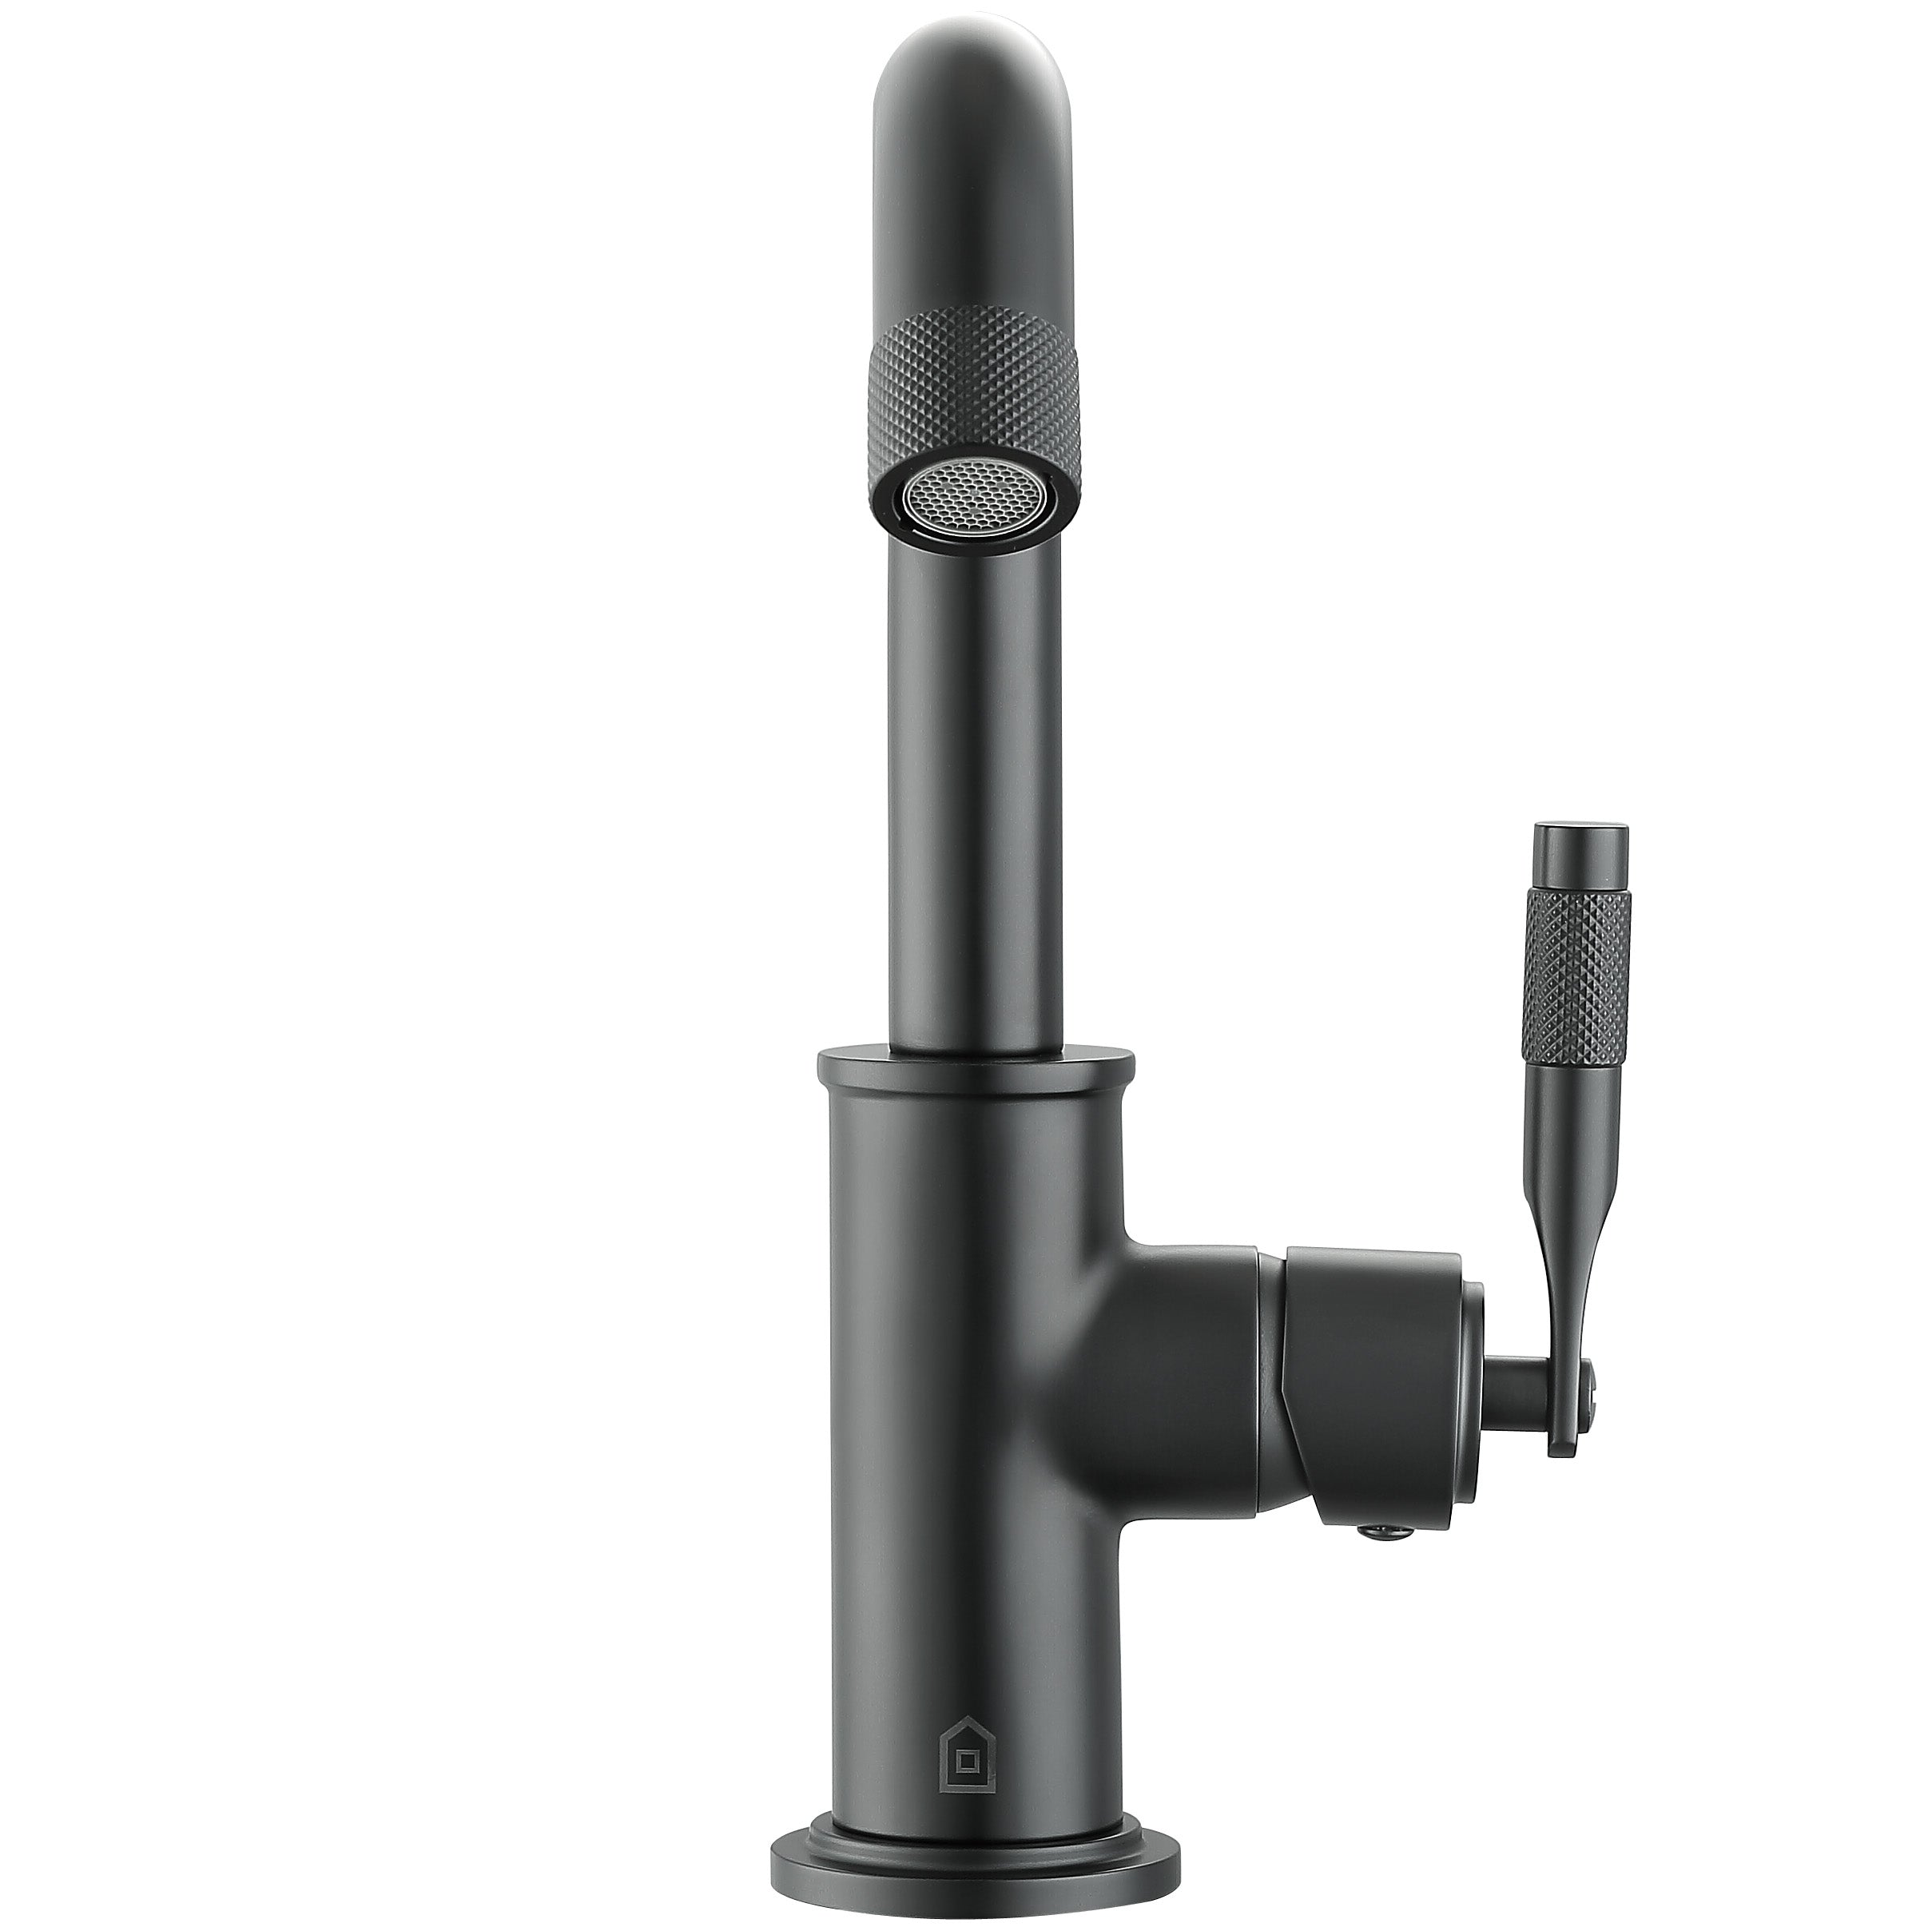 Industria Series Single Lever Bathroom Faucet in Matte Black